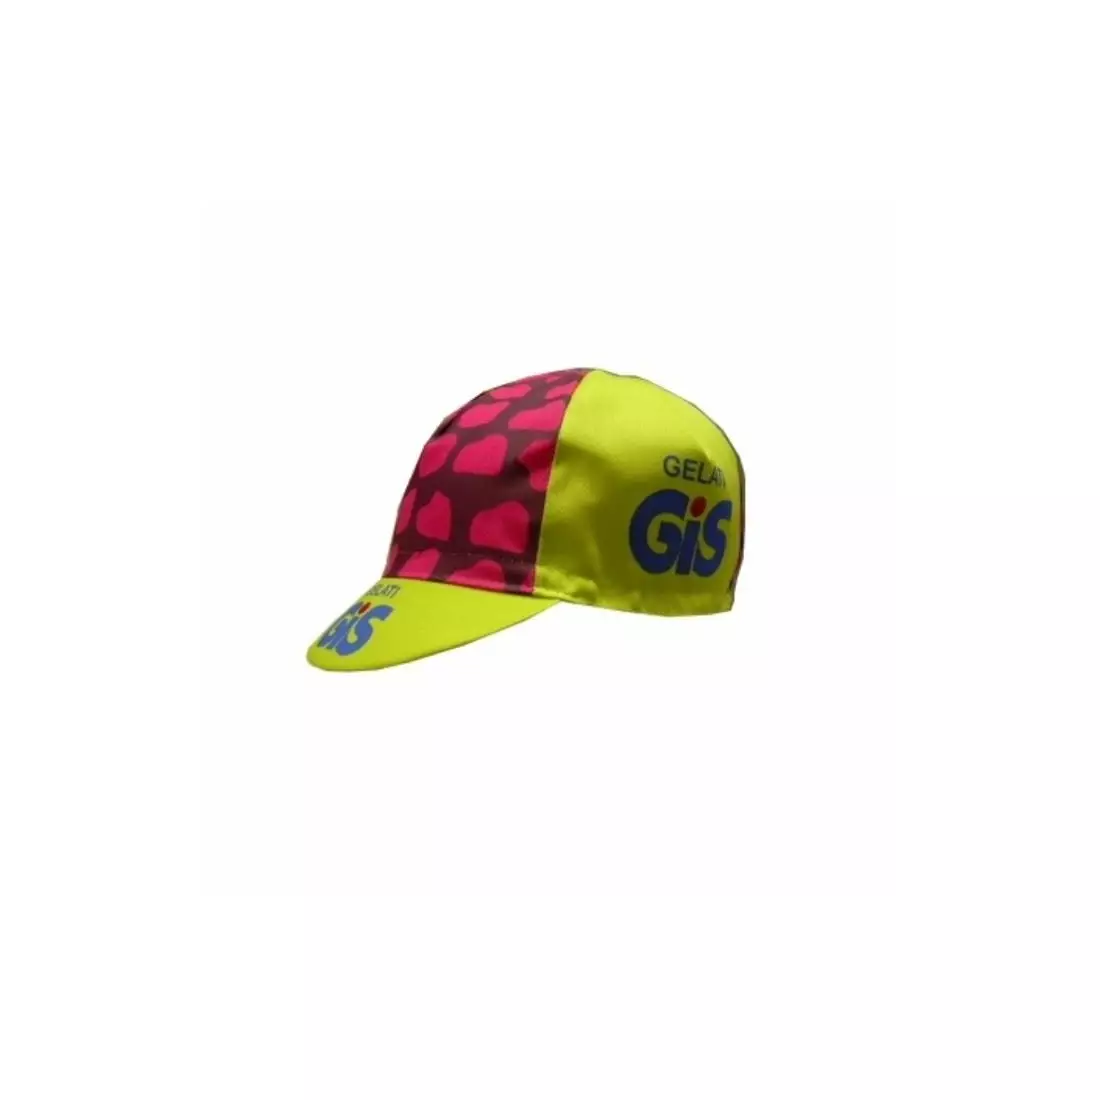 APIS PROFI GIS GIALATI 2 cycling cap with visor